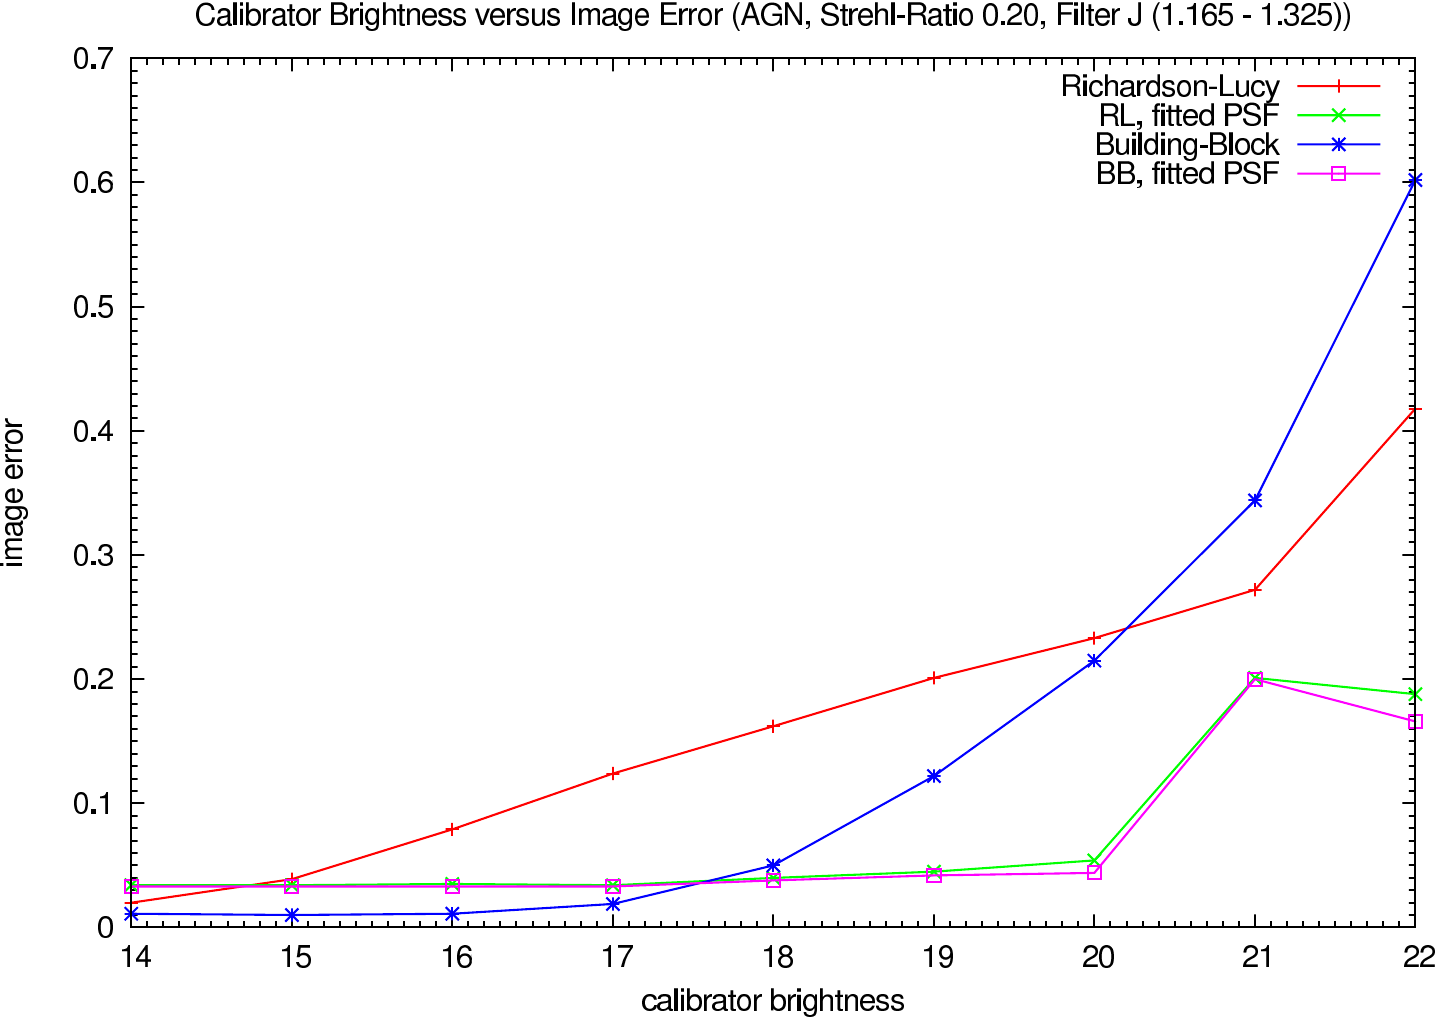 Image errors depending on the calibrator brightness, strehl ratio 0.20, J-Band